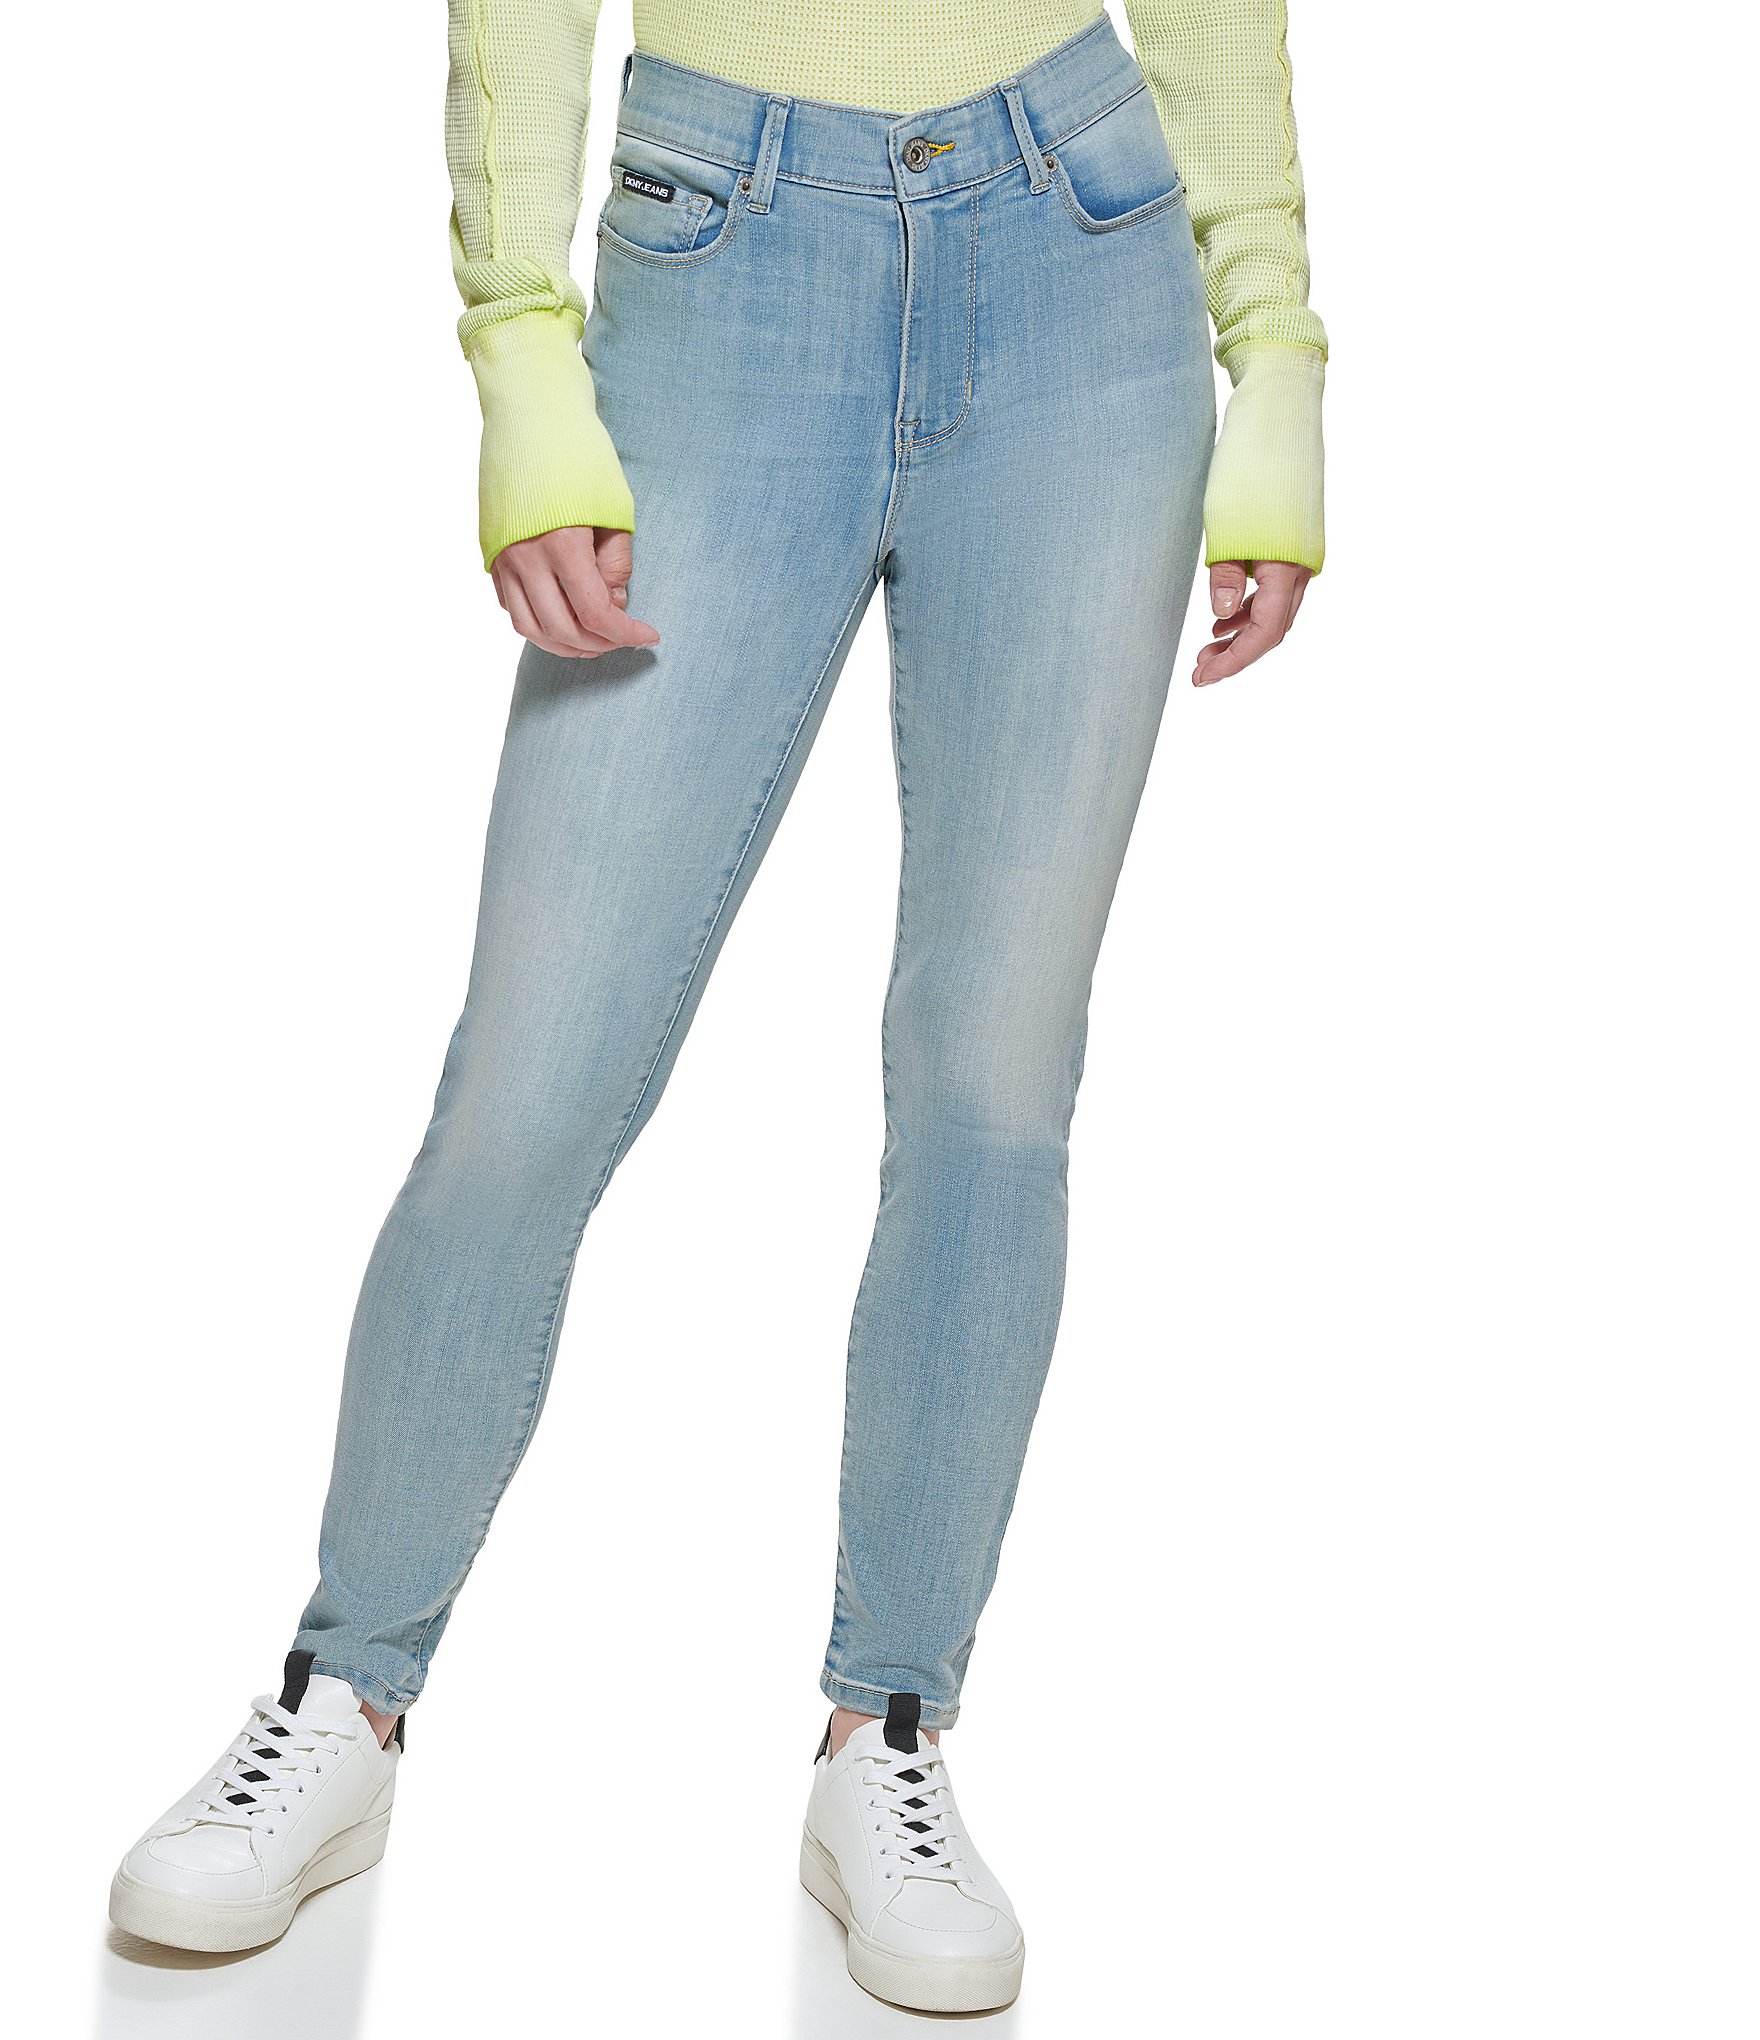 Doornen Geslagen vrachtwagen campagne DKNY Jeans Super Stretch Denim Bleecker Shaping Skinny Jeans | Dillard's